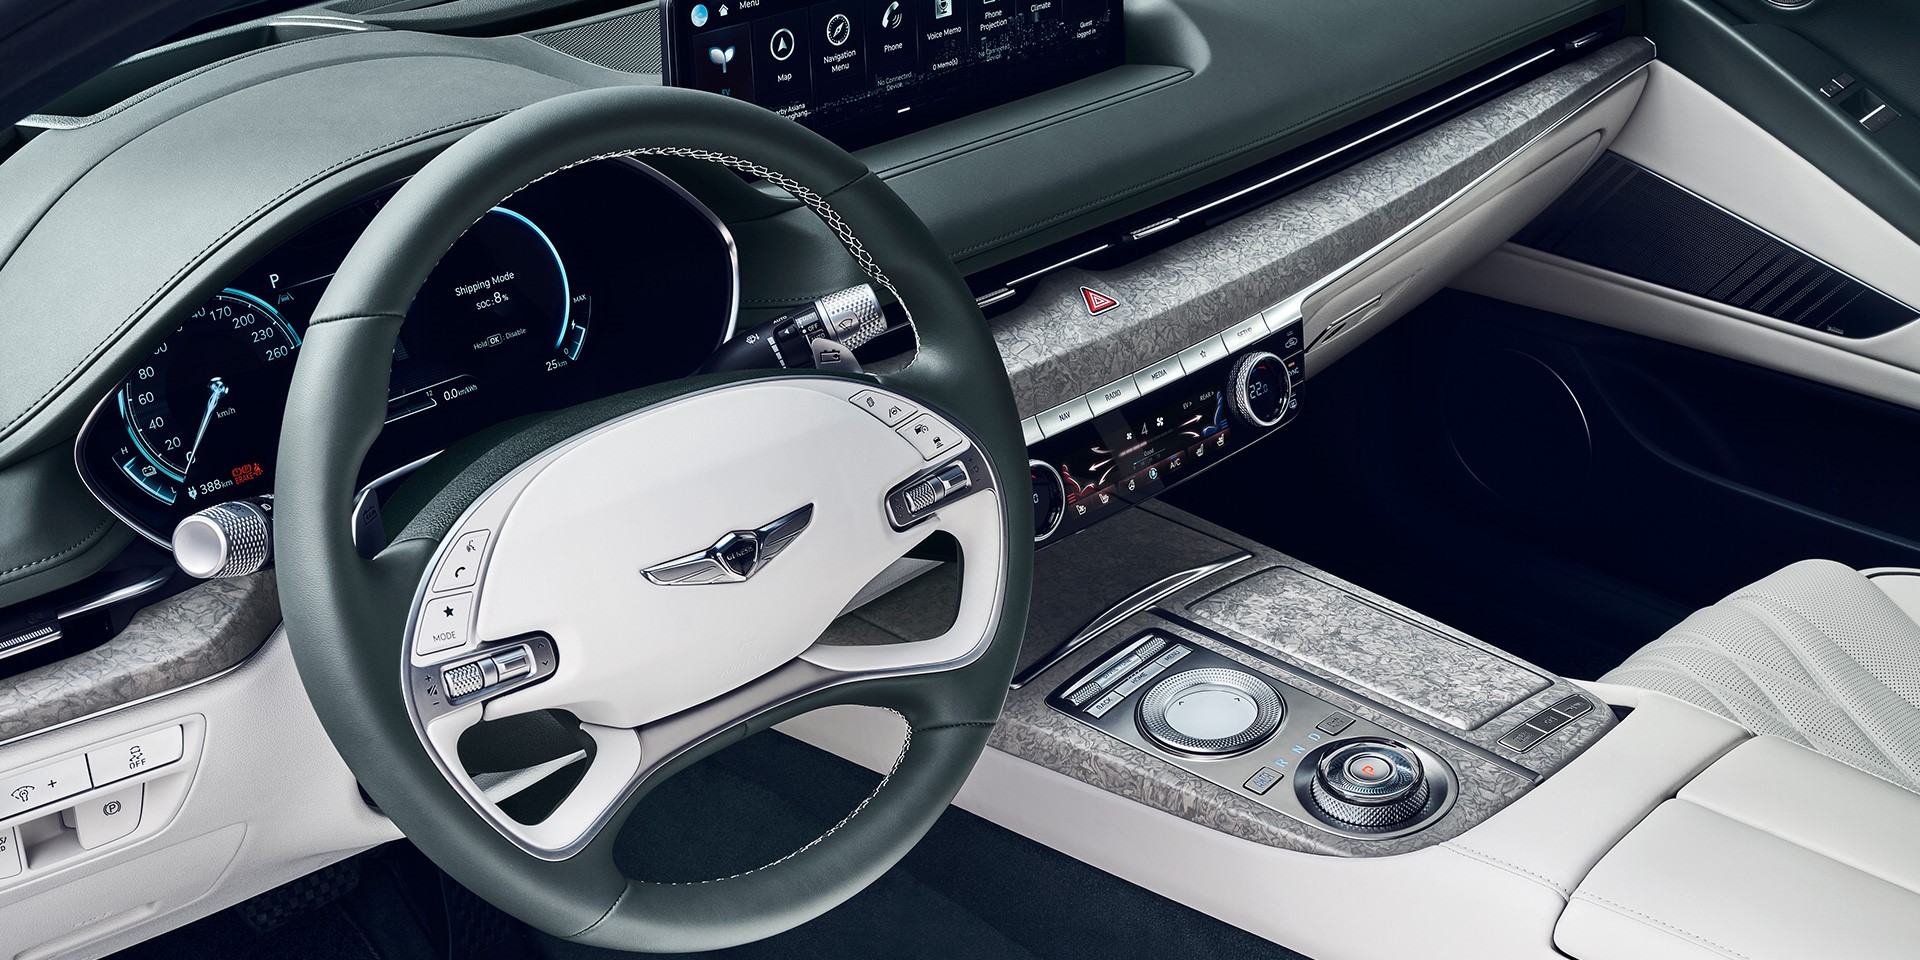 2023 Genesis G80: A New Era of Electric Luxury Cars